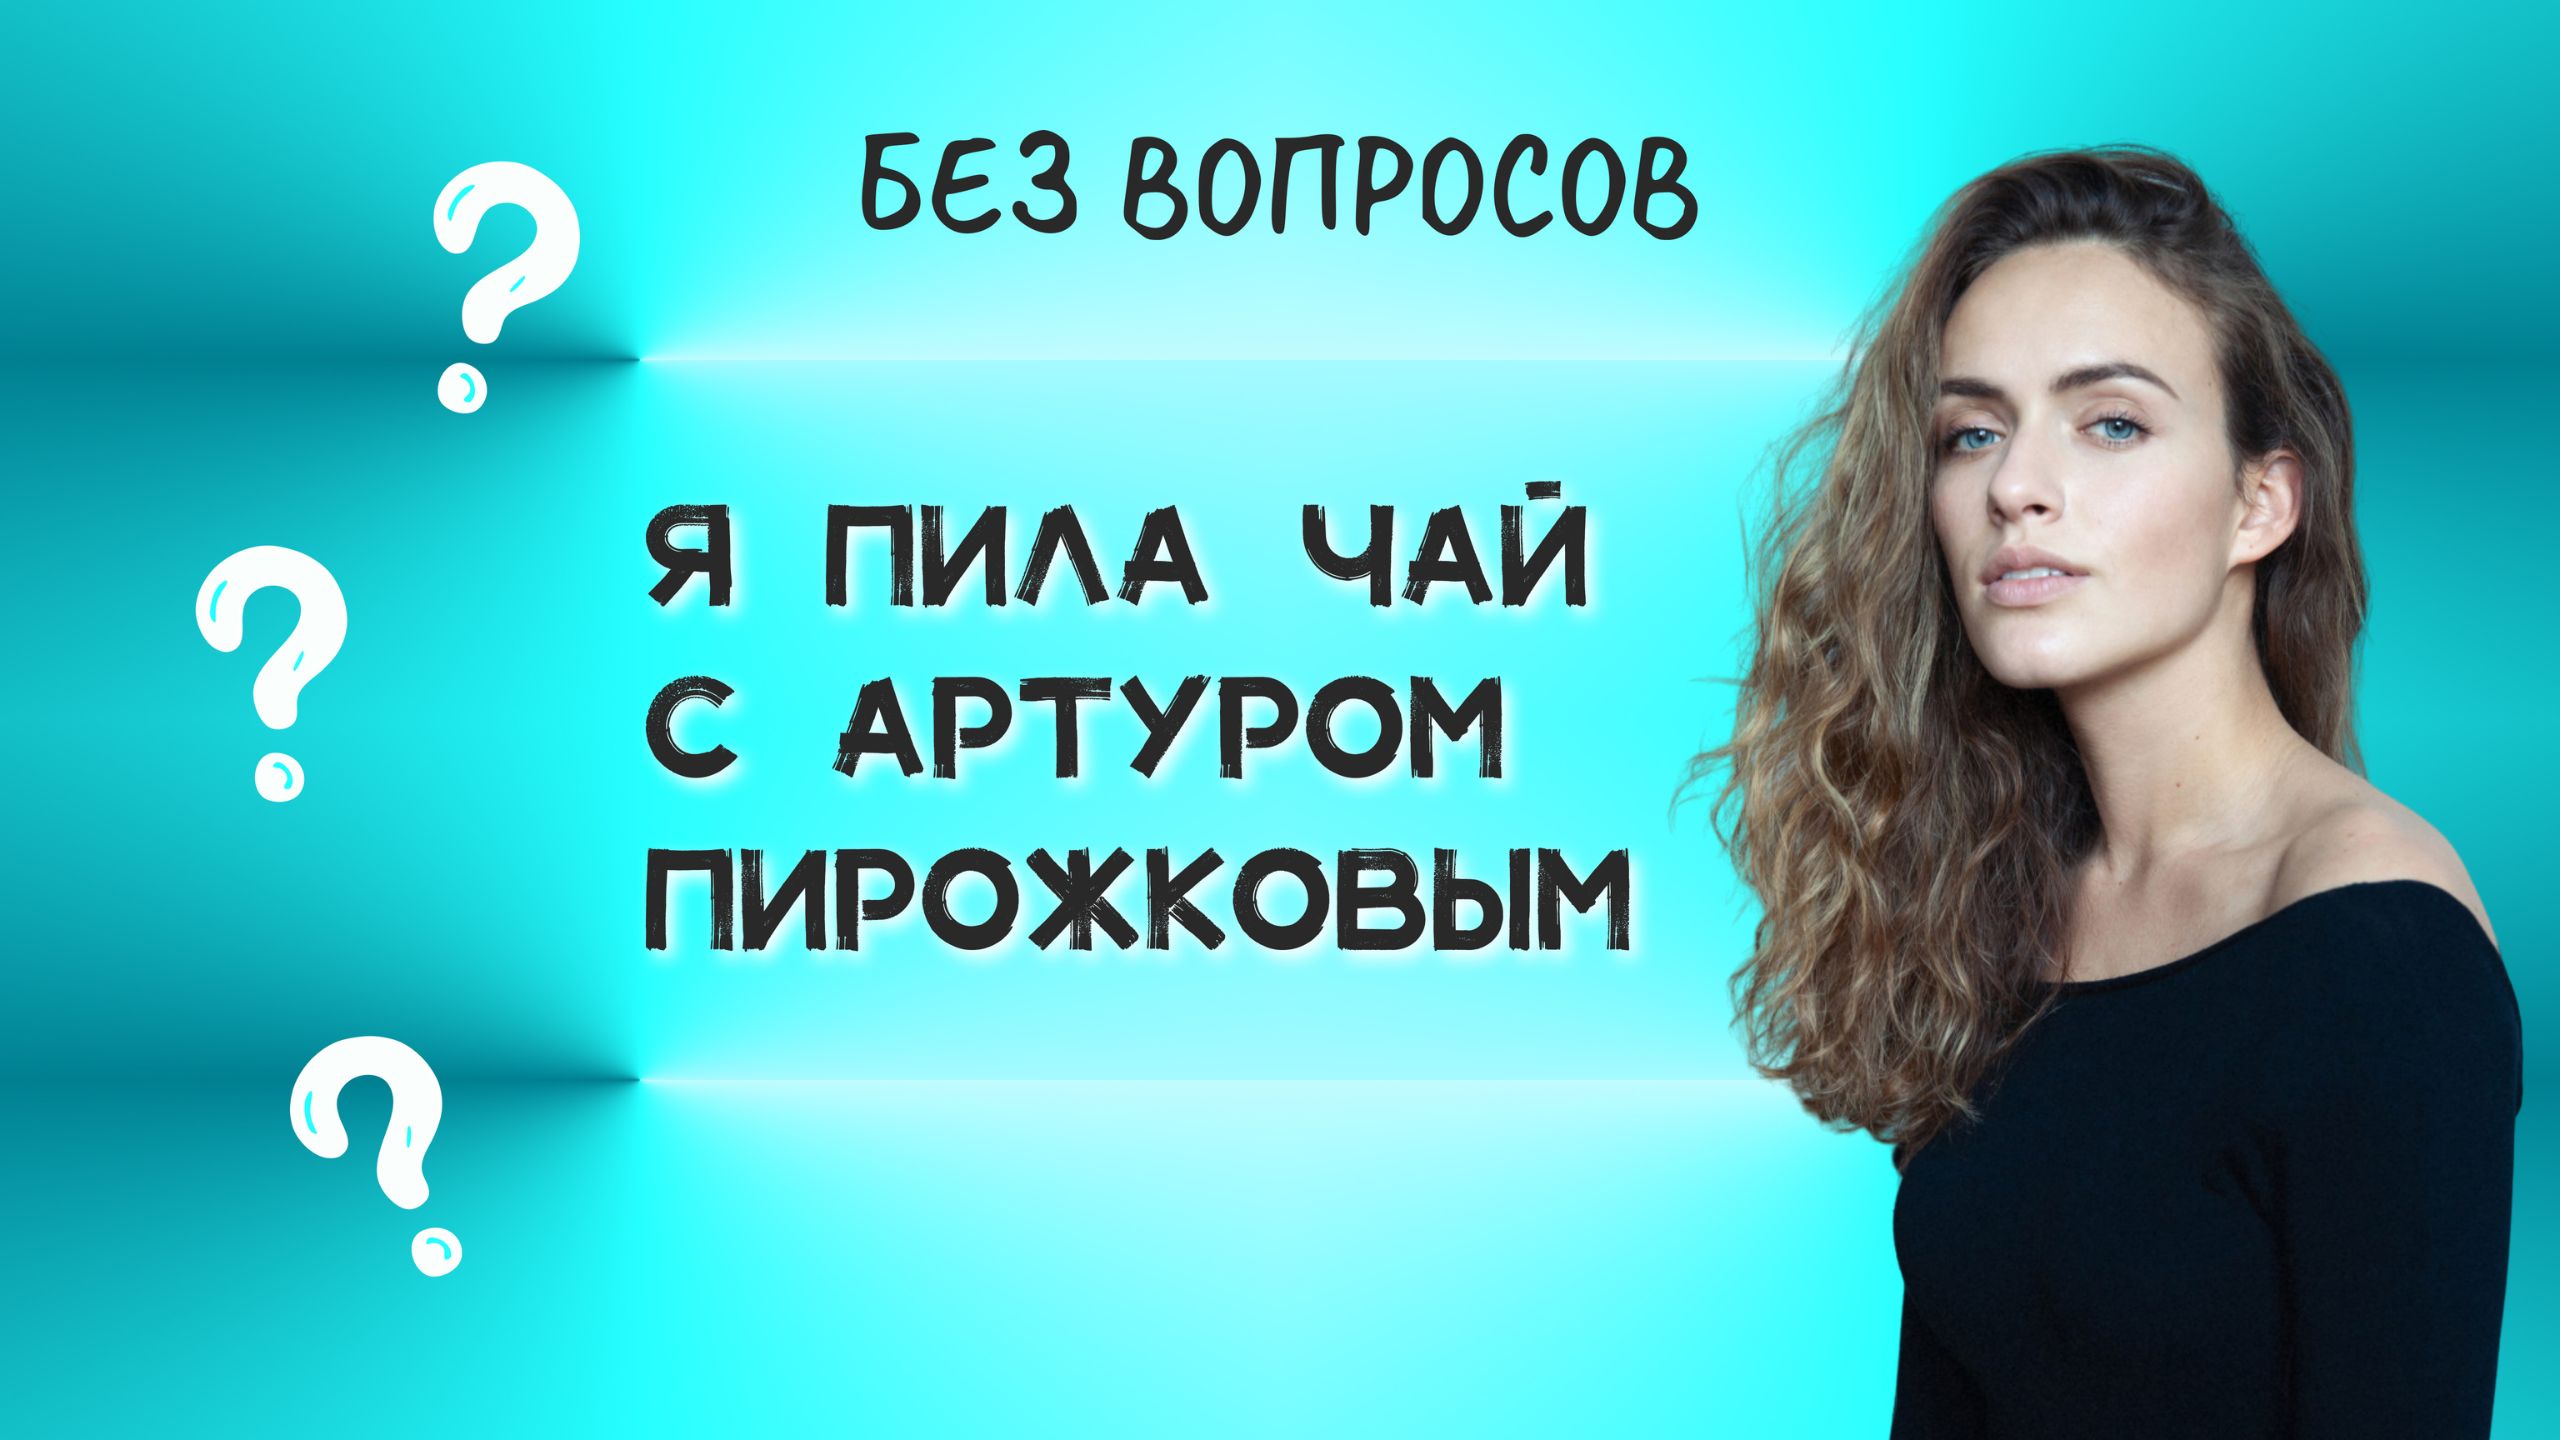 Дарья Баслык, Артур Пирожков и Хачапури